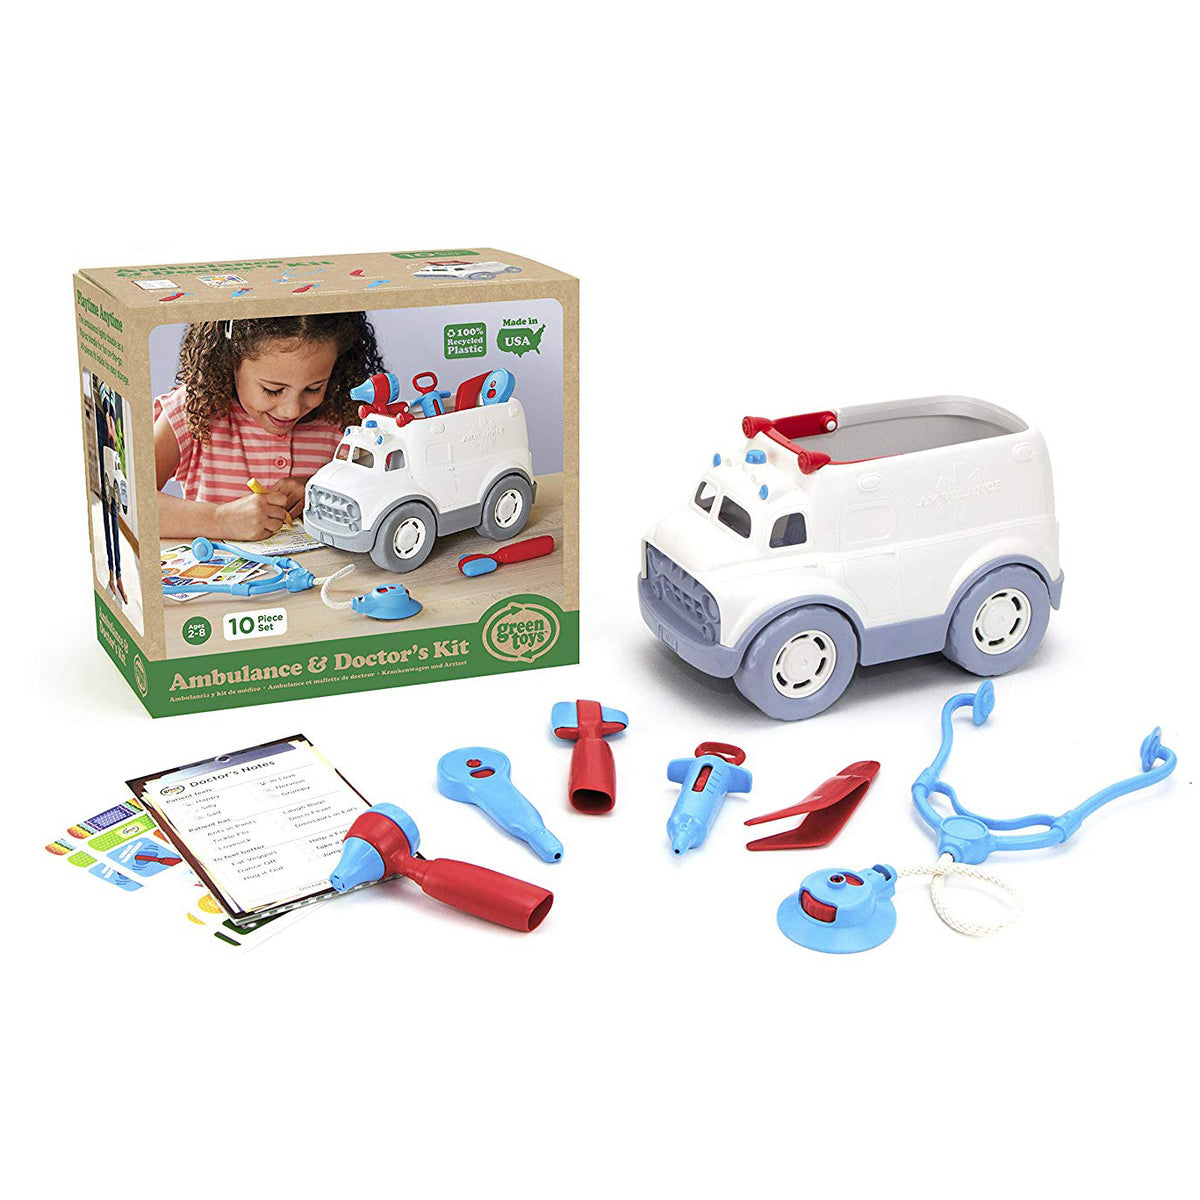 Kids Doctor Kit with Ambulance